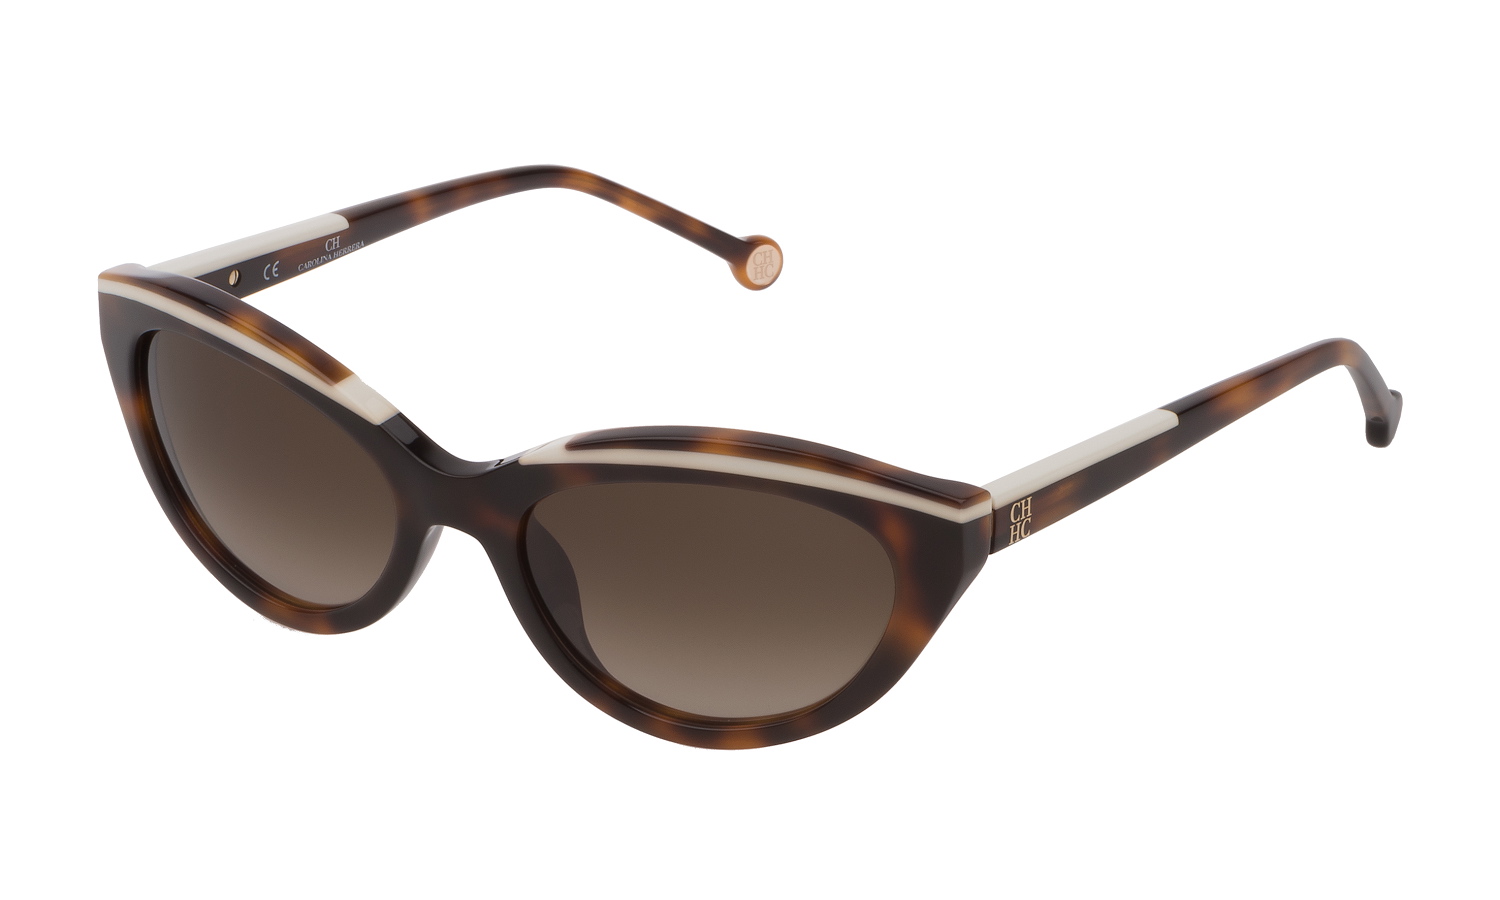 Carolina Herrera SHE833 Sunglasses from $176.30 | Carolina Herrera ...